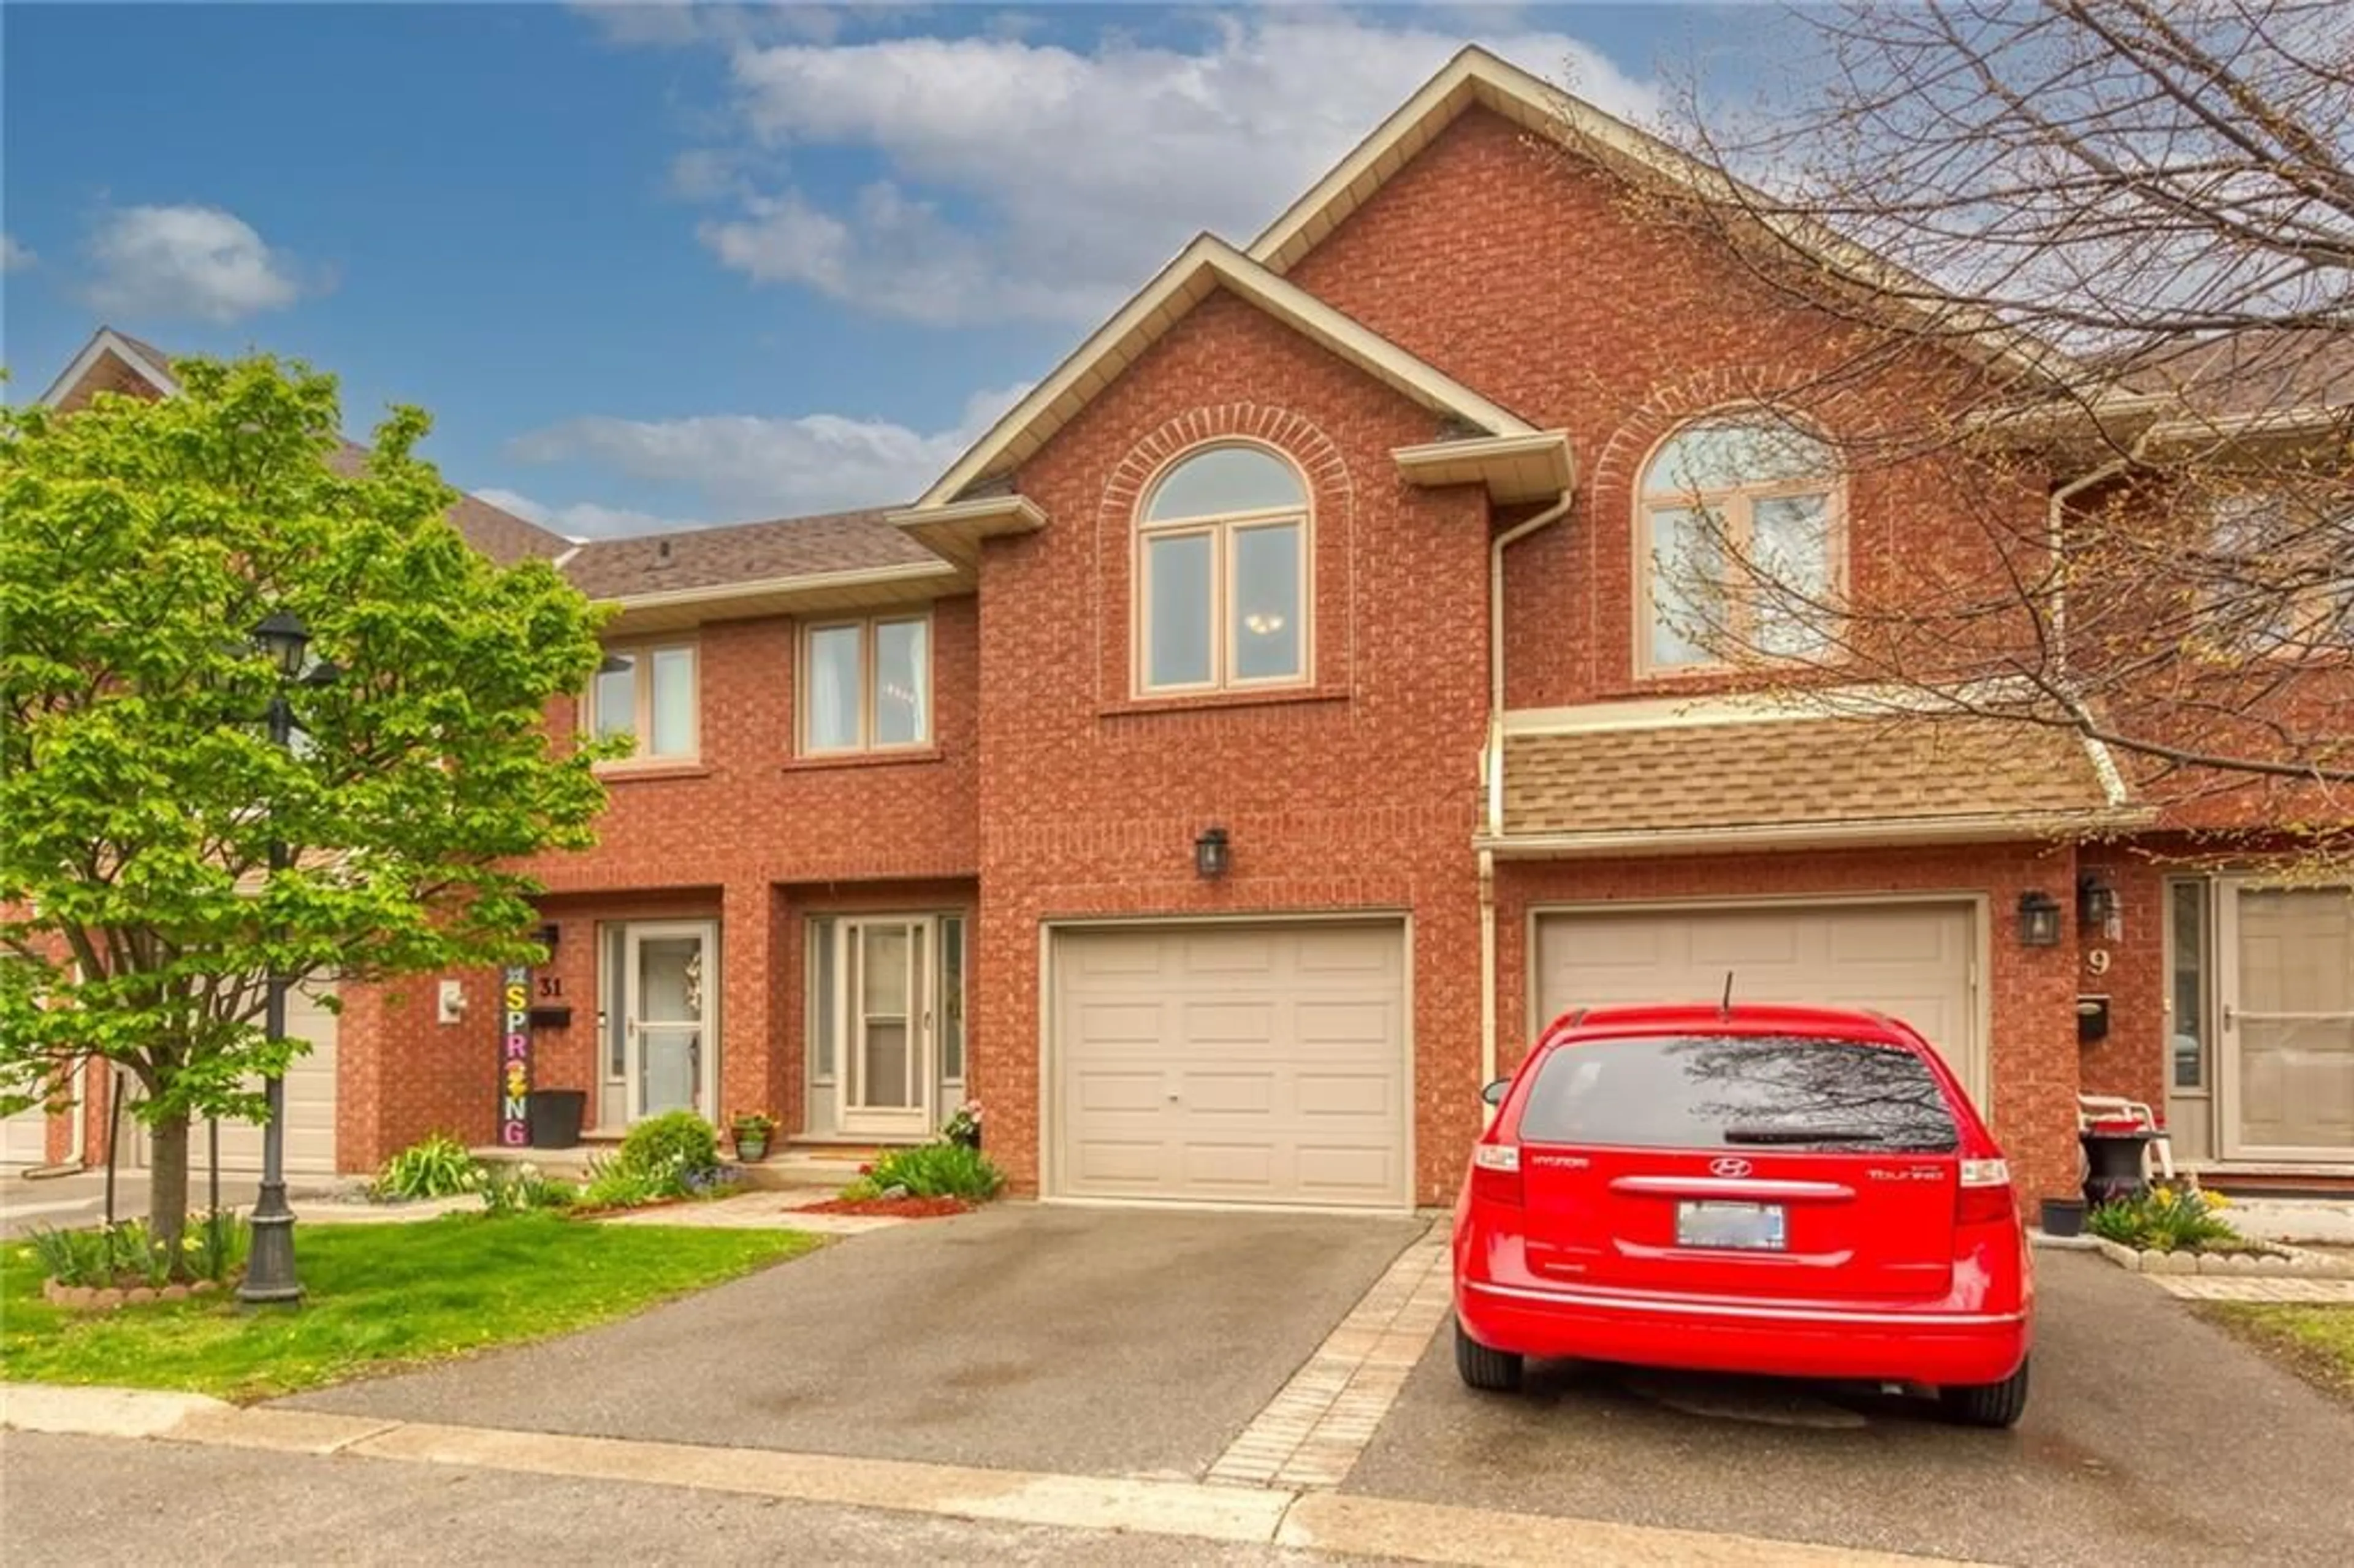 Home with brick exterior material for 502 BARTON St #30, Stoney Creek Ontario L8E 5B5